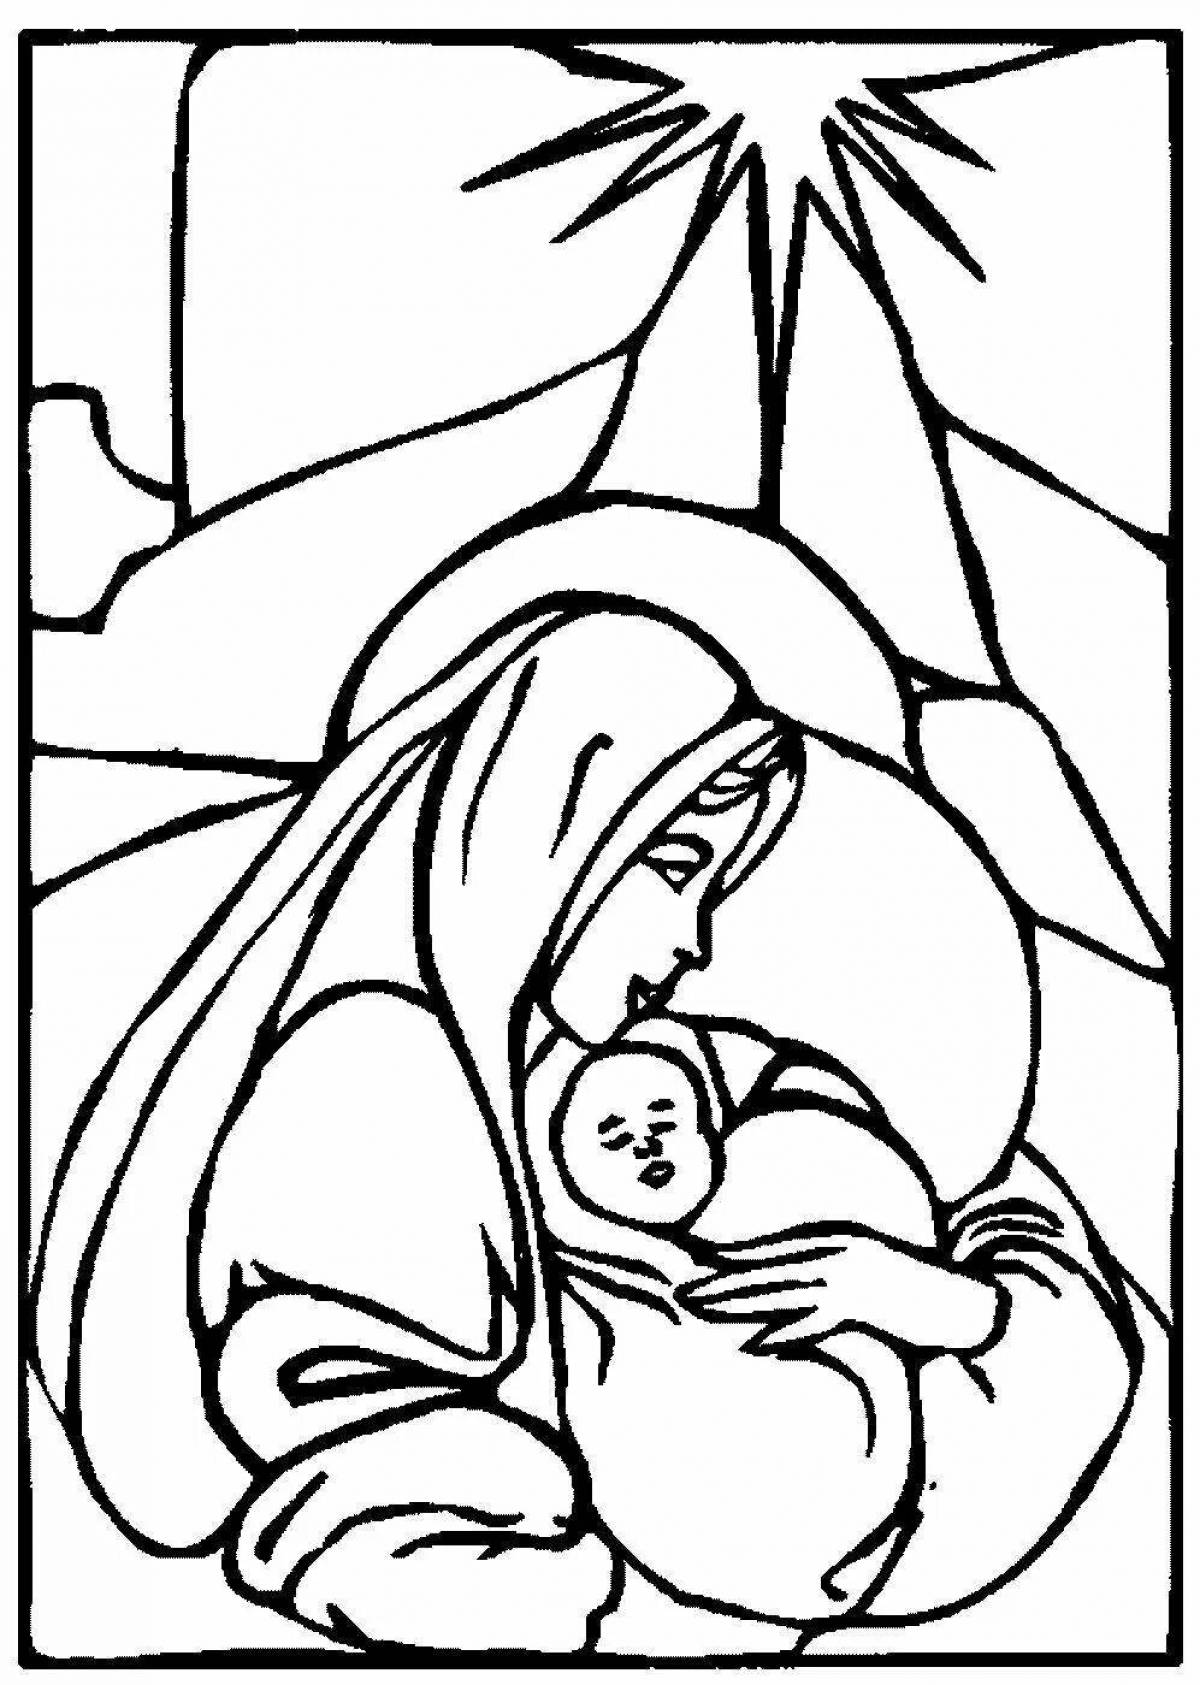 Brilliant jesus in the manger coloring book